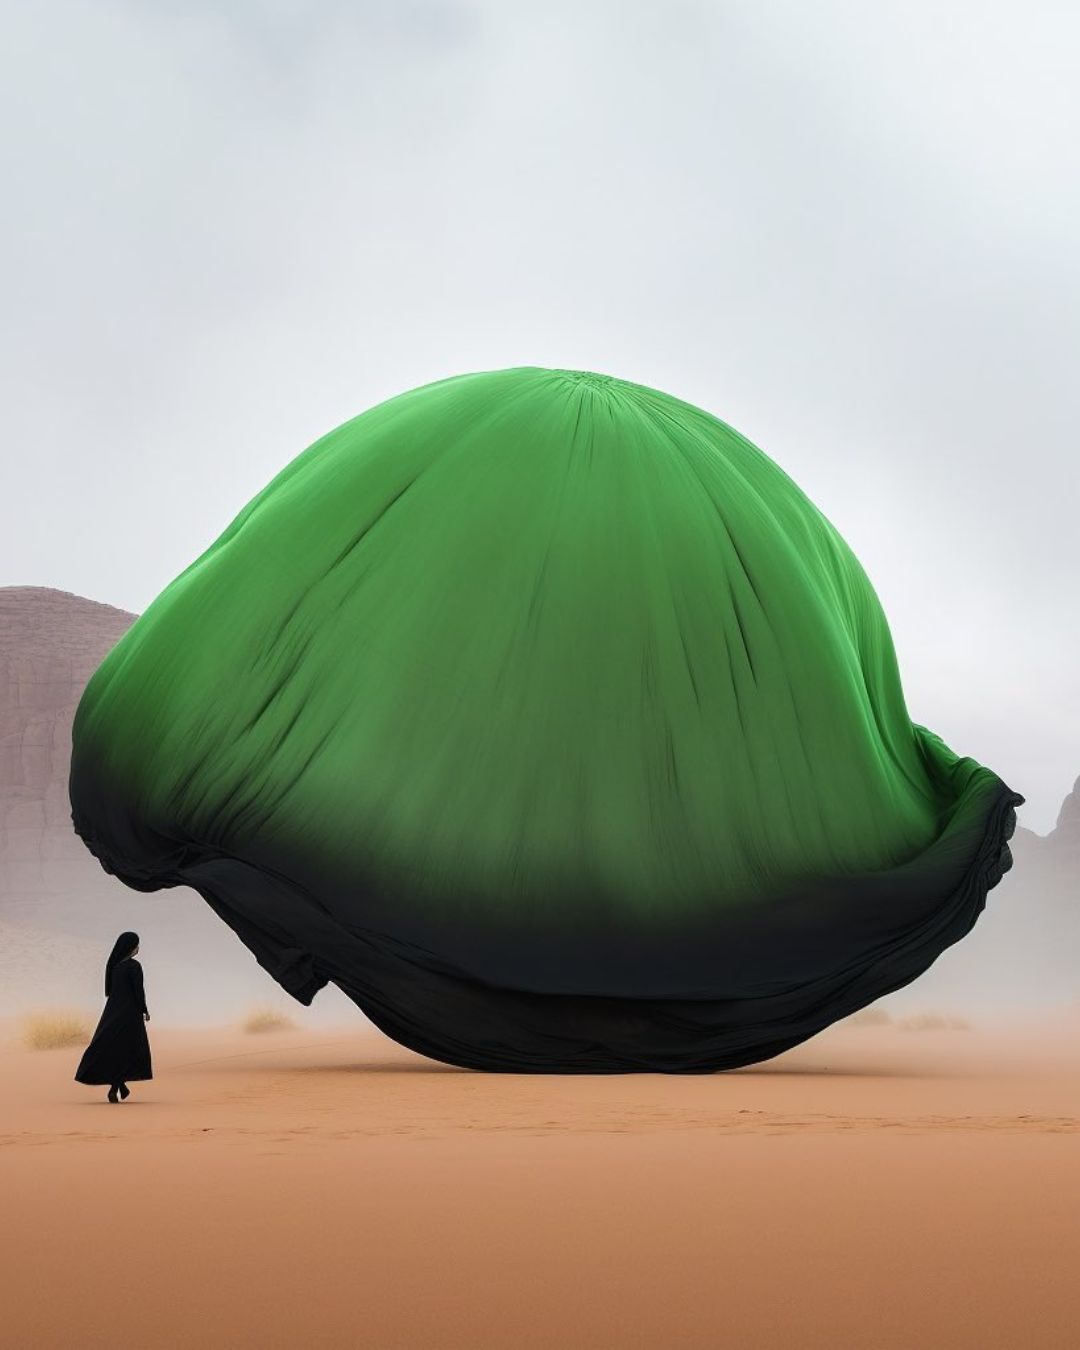 Future Bedouin - Arab Artists - GCC Artwork